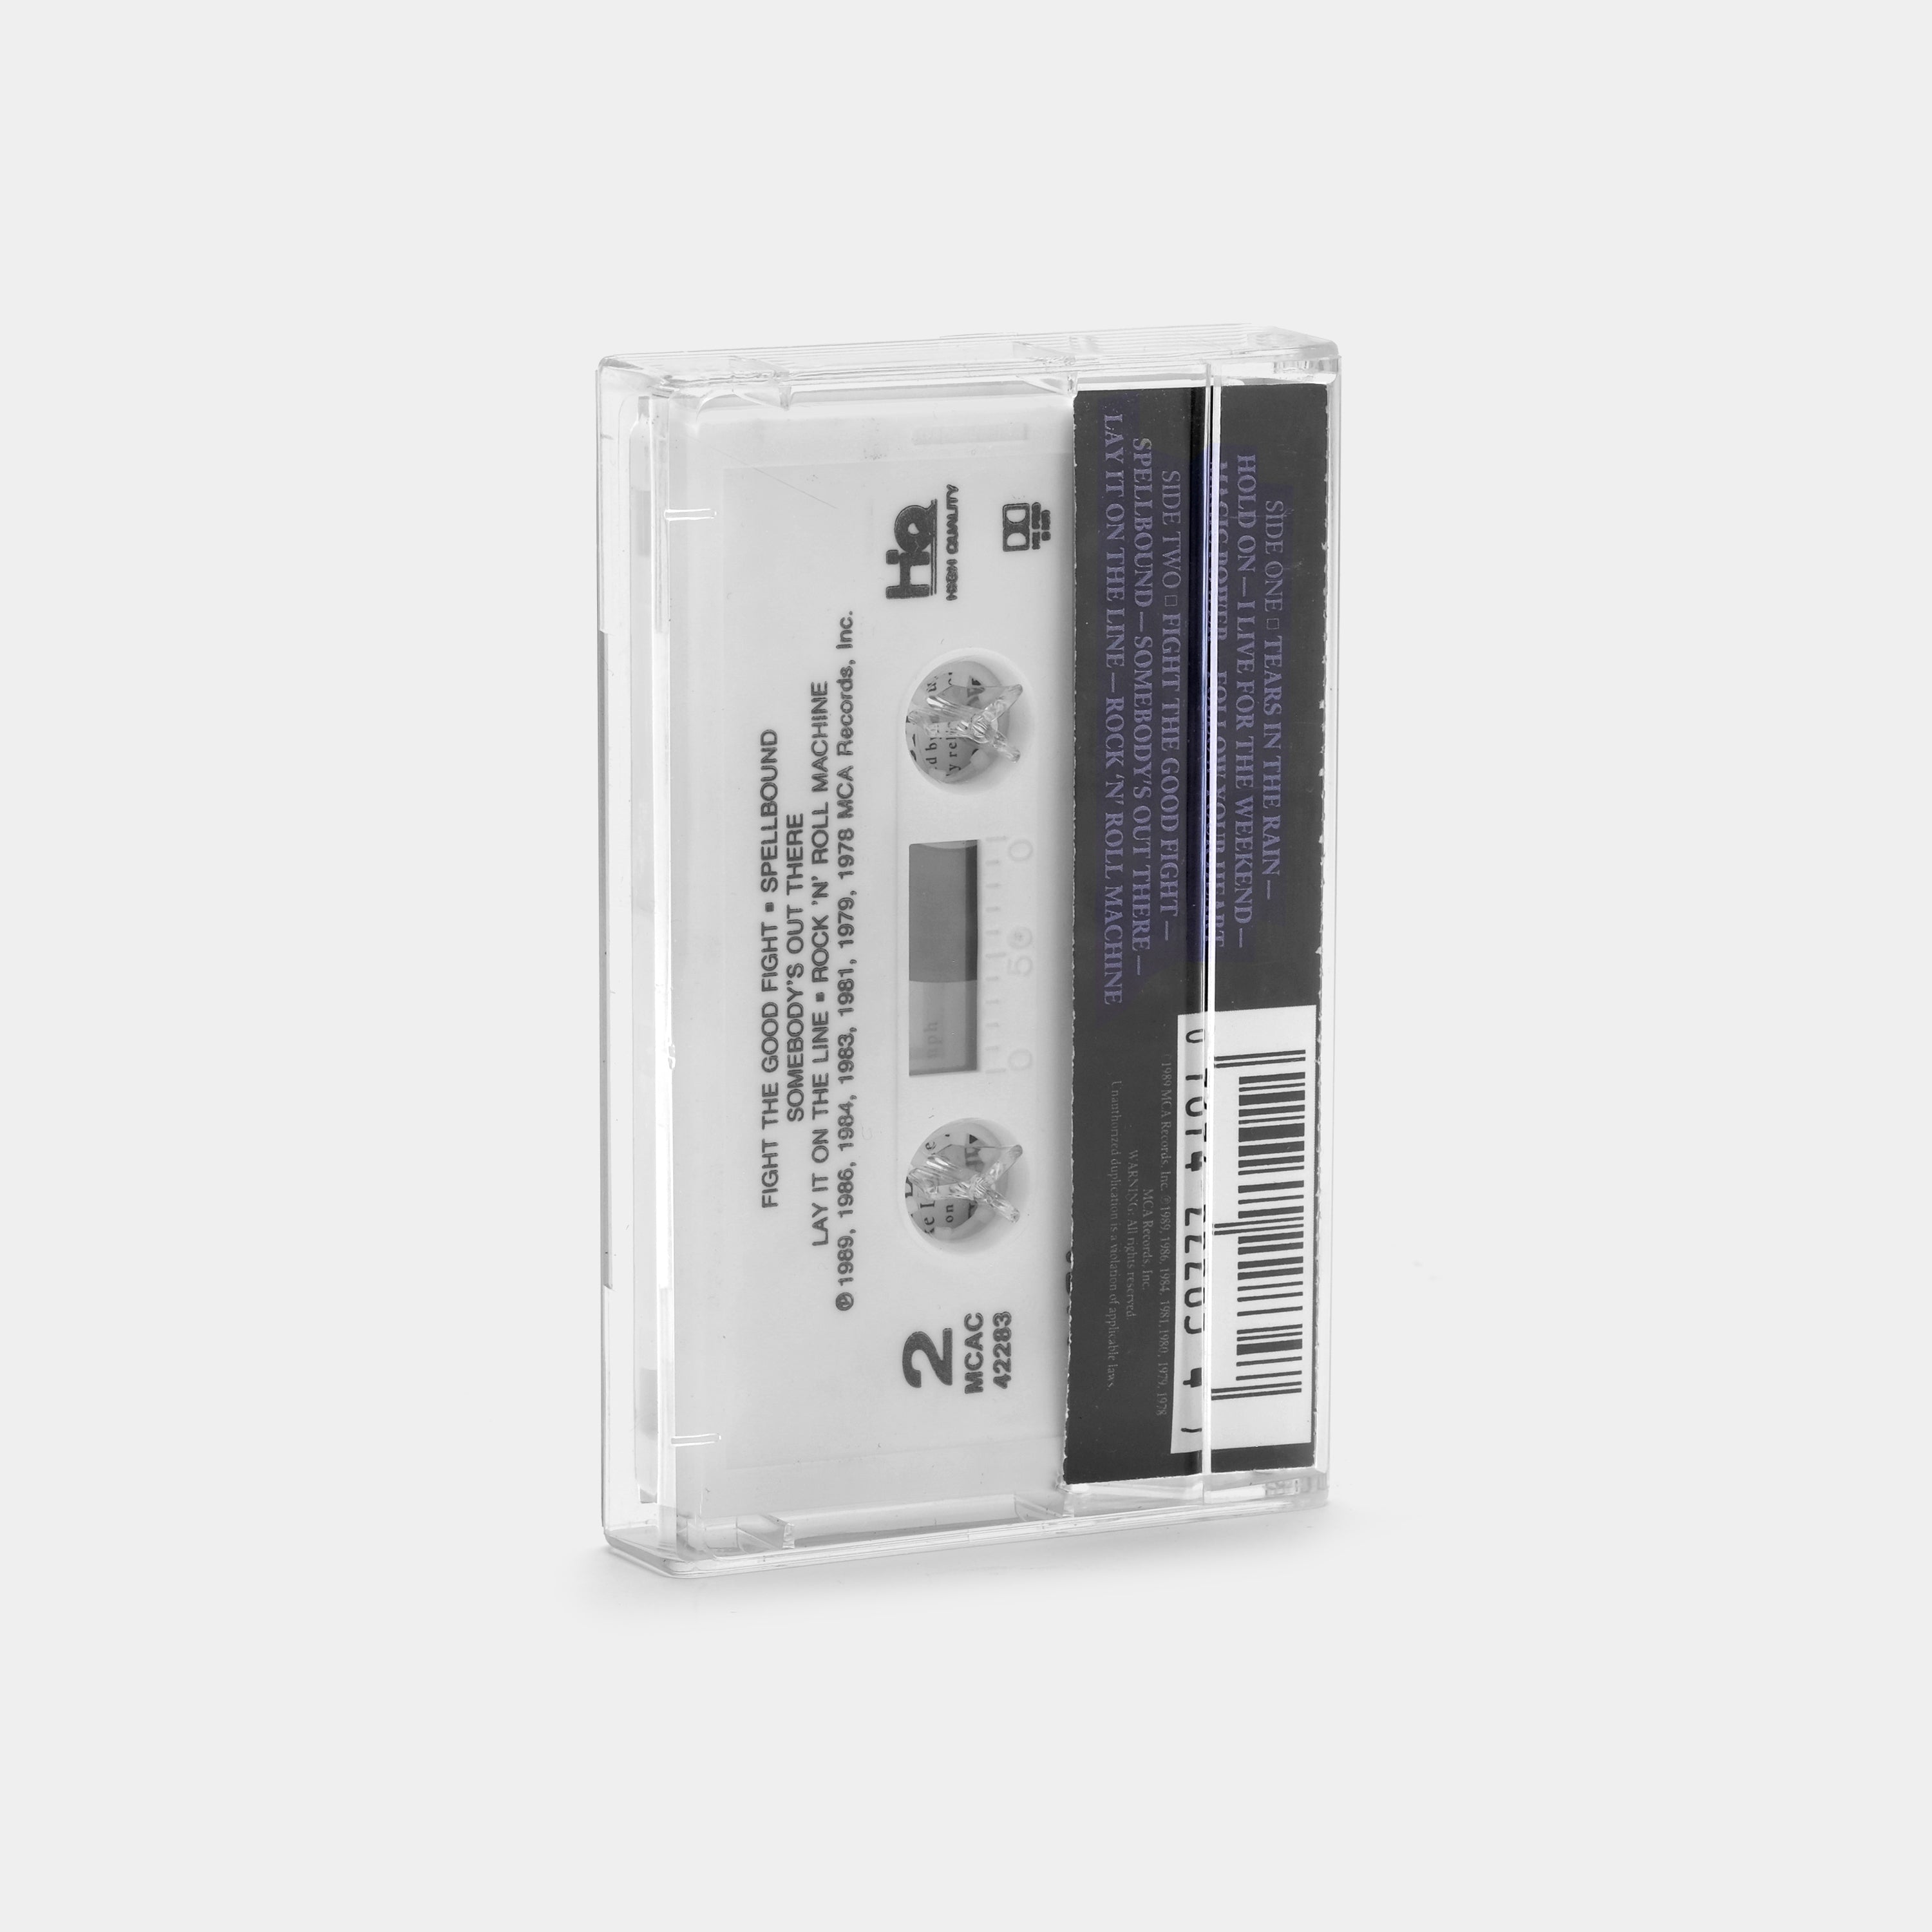 Triumph - Classics Cassette Tape